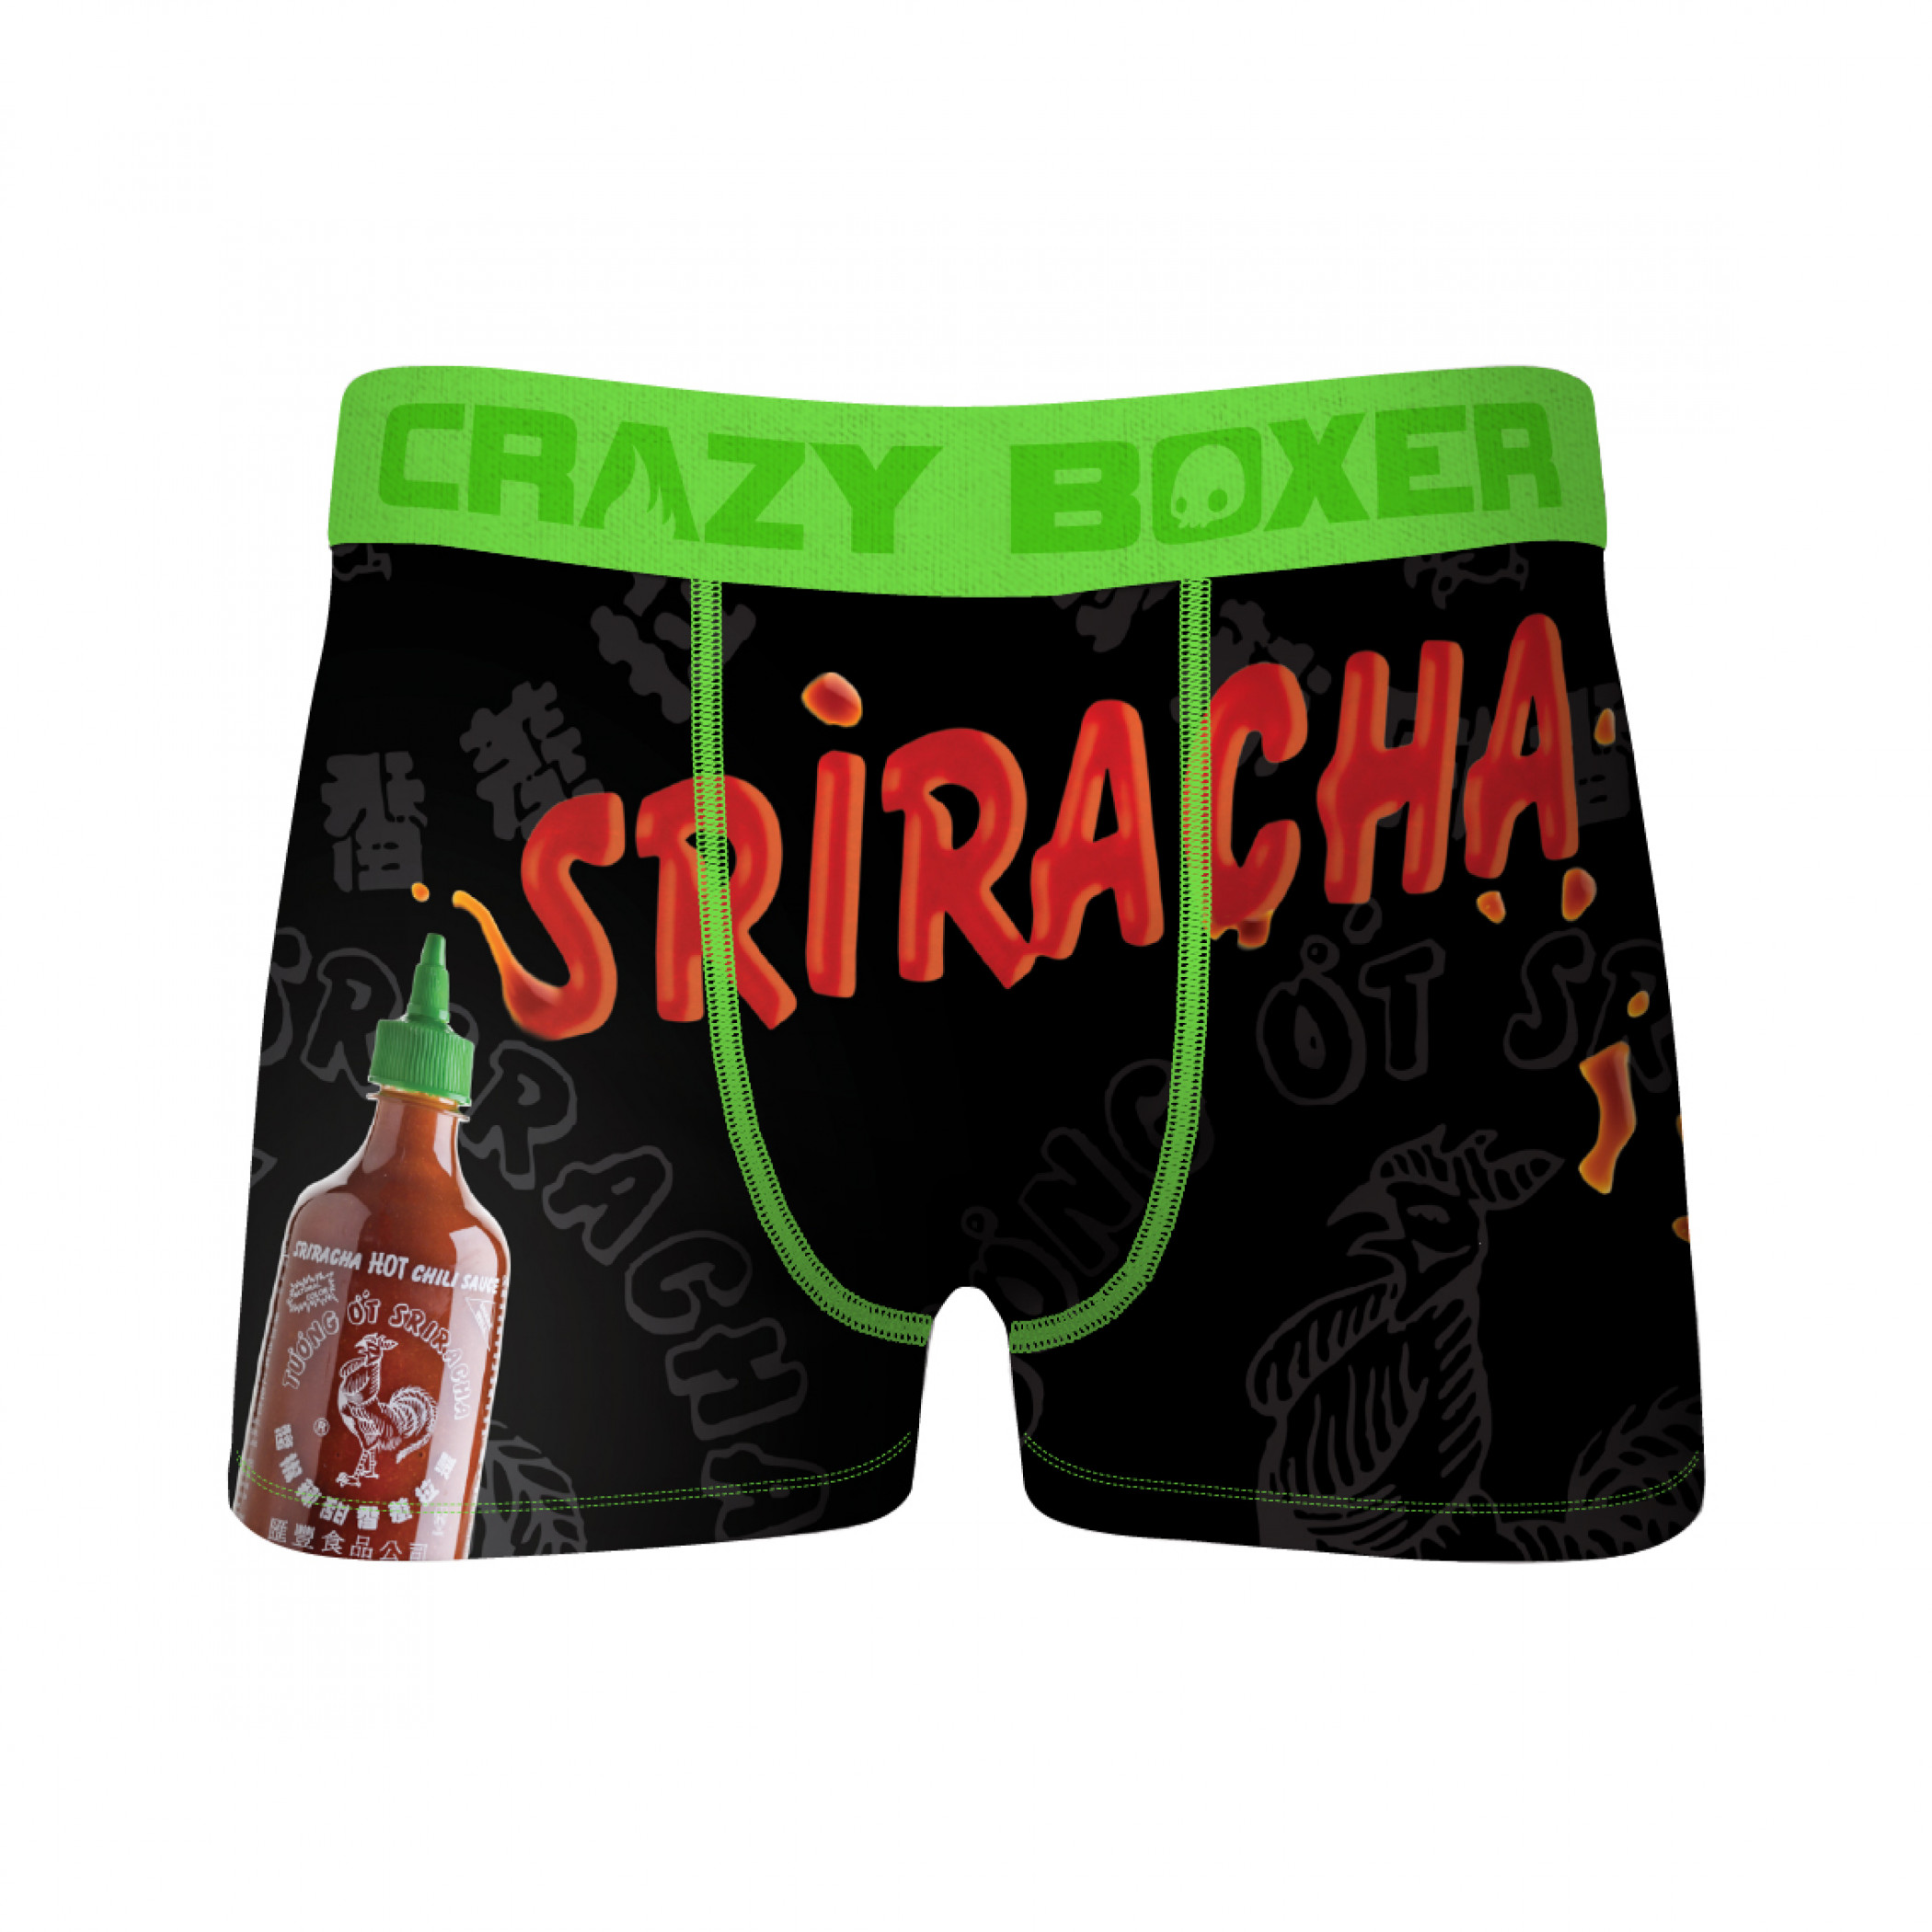 Crazy Boxers Sriracha Bottle and Text Boxer Briefs